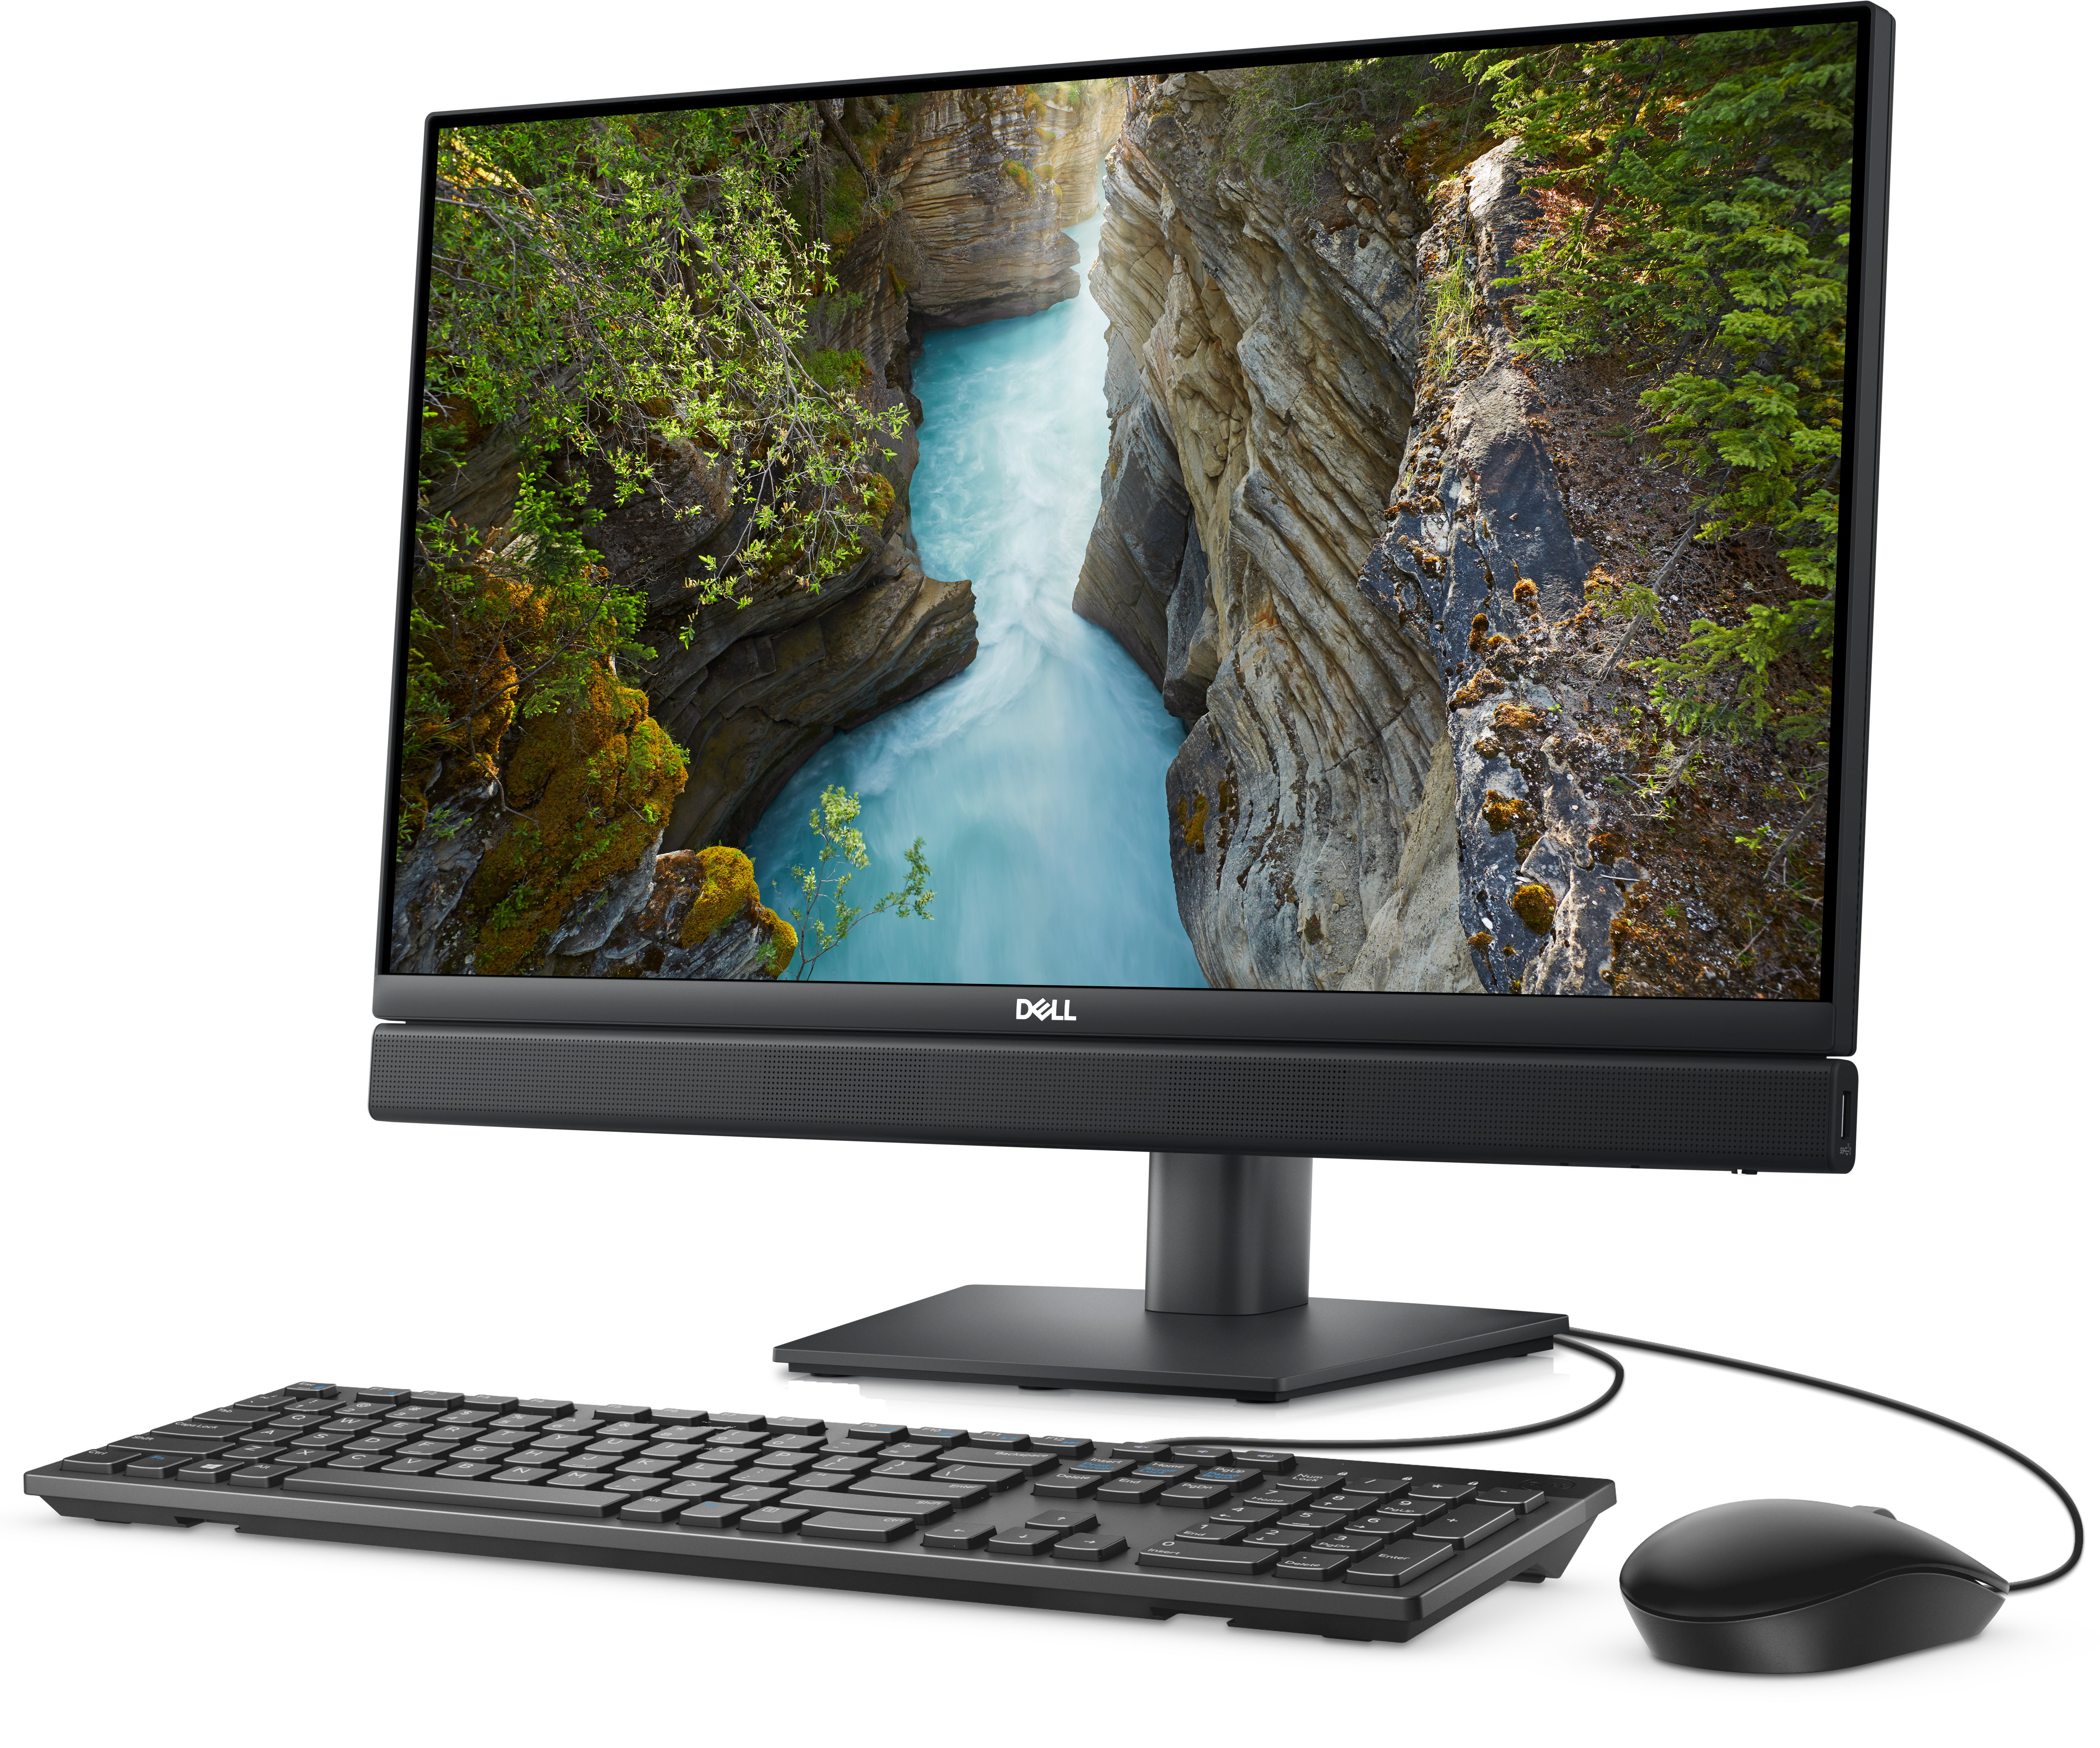 Optiplex 7000 Series All-in-One Desktop